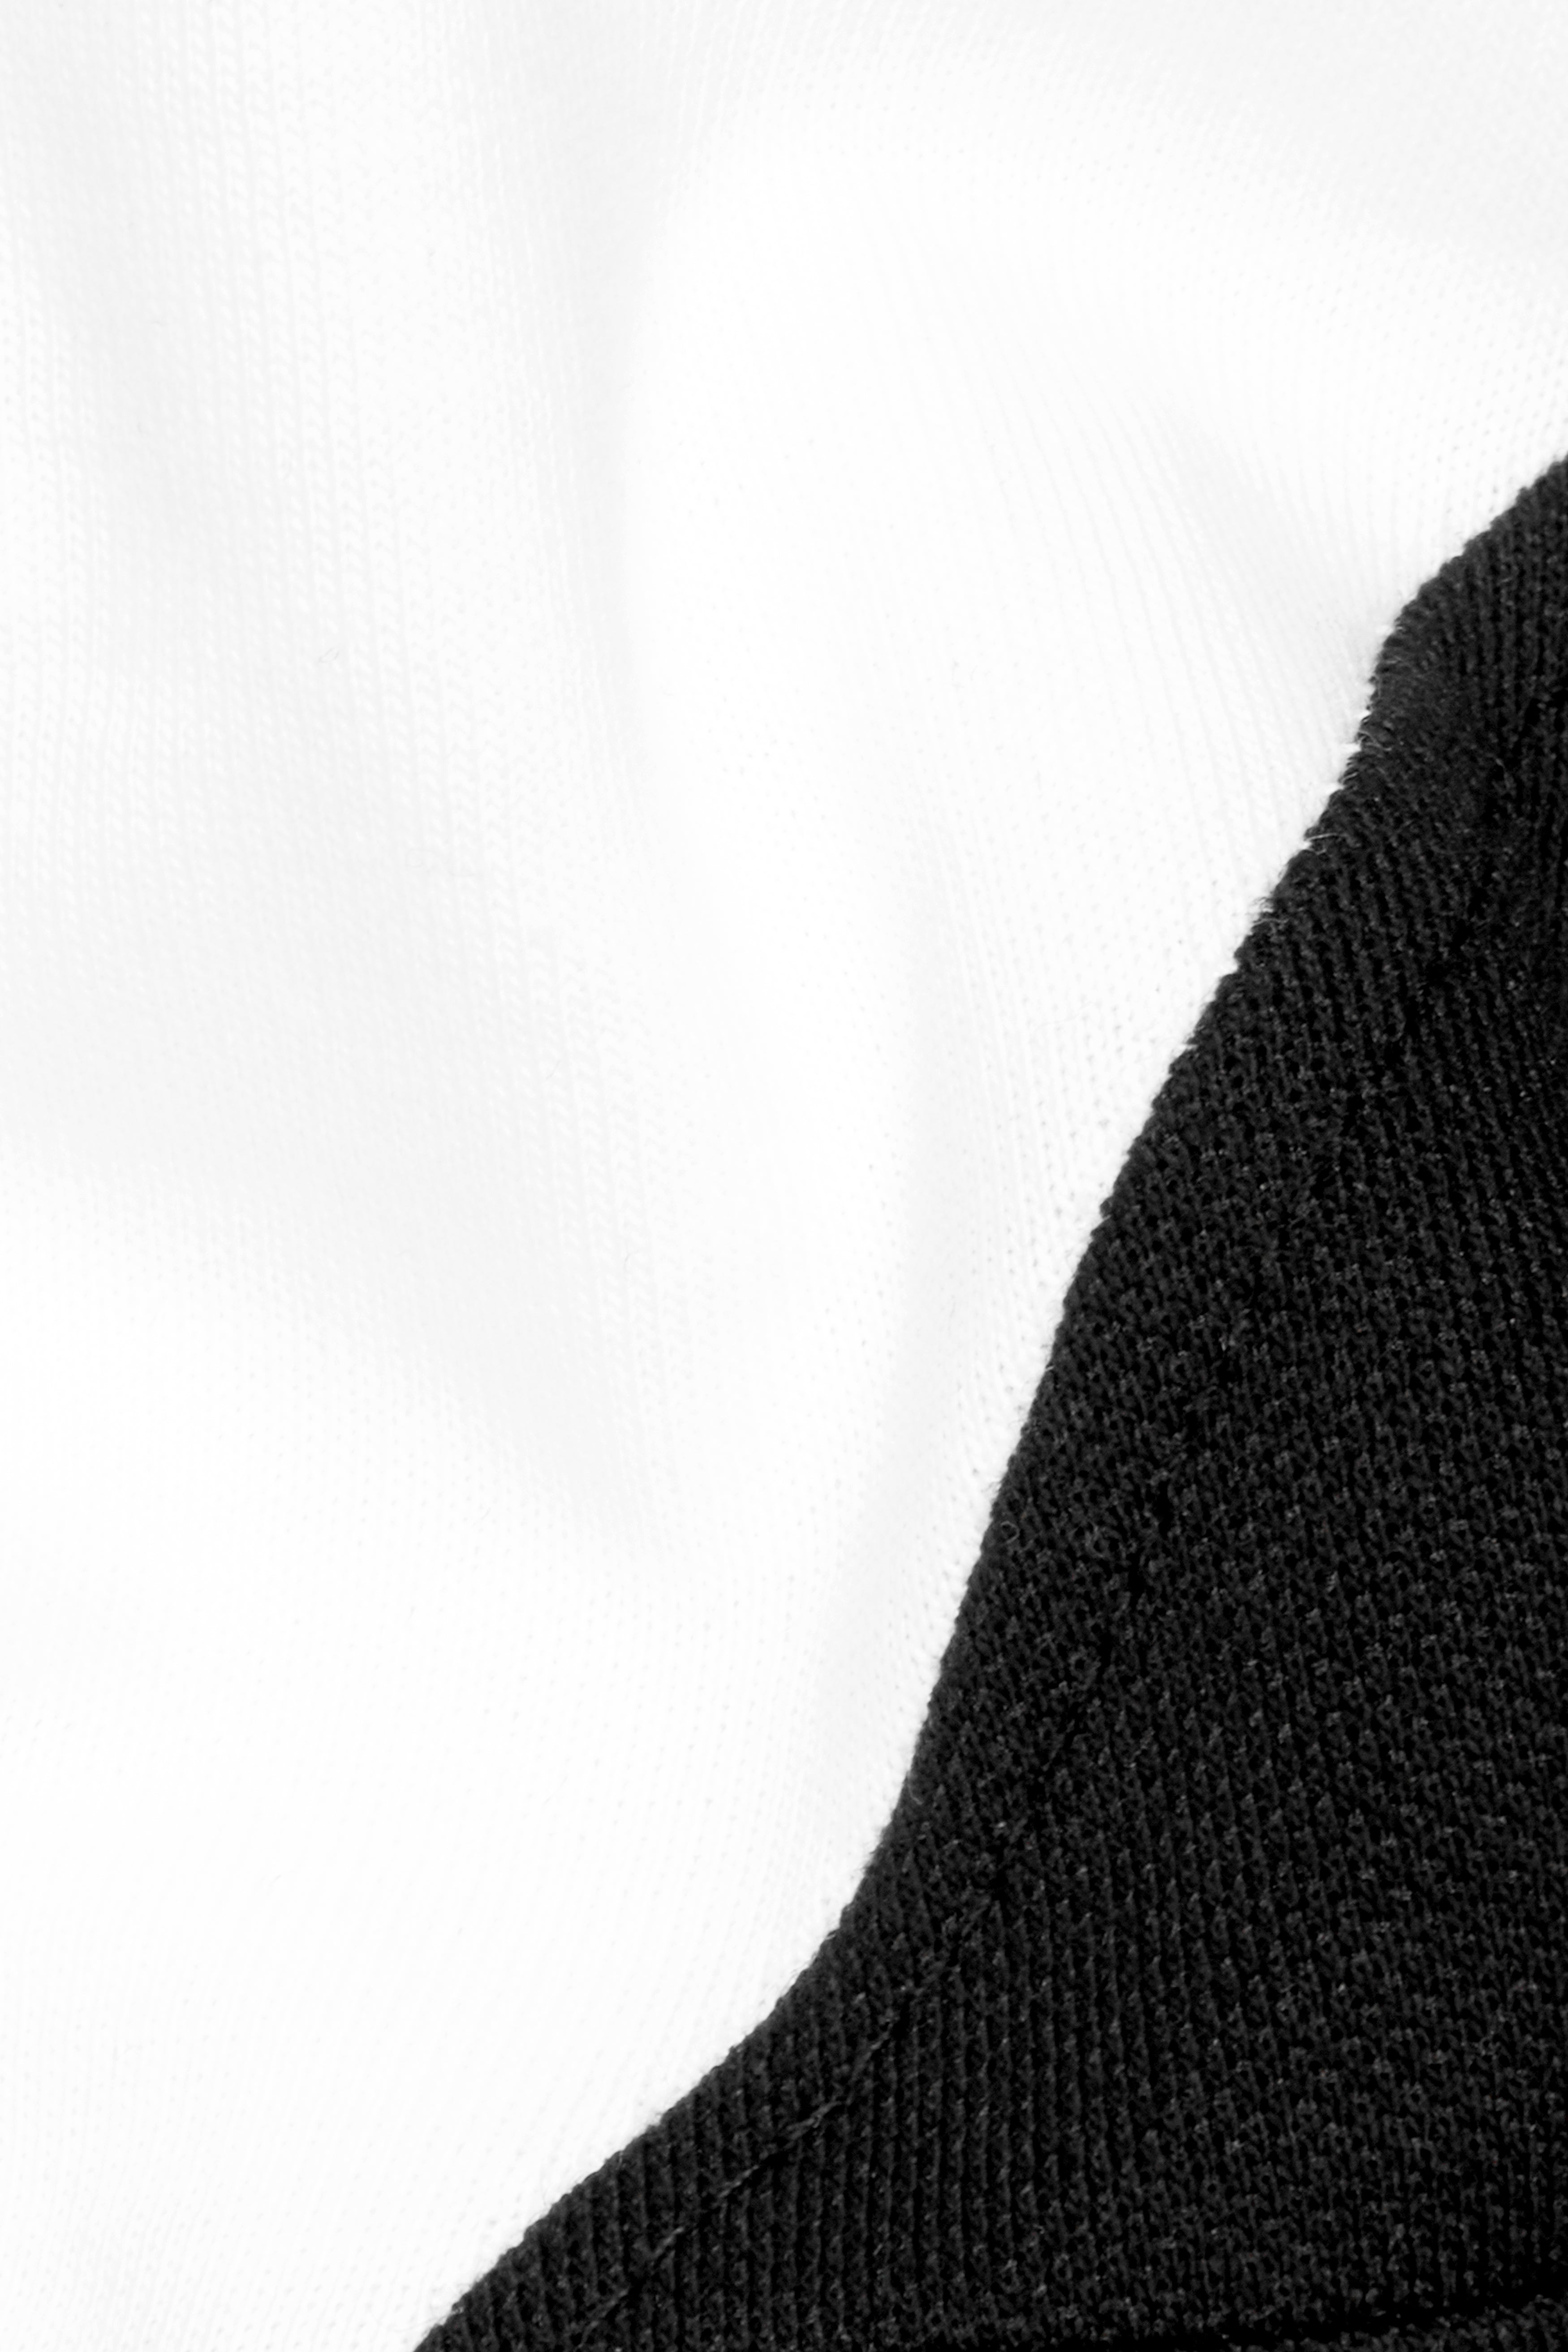 Bright White and Black Premium Cotton T-Shirt TS910-S, TS910-M, TS910-L, TS910-XL, TS910-XXL